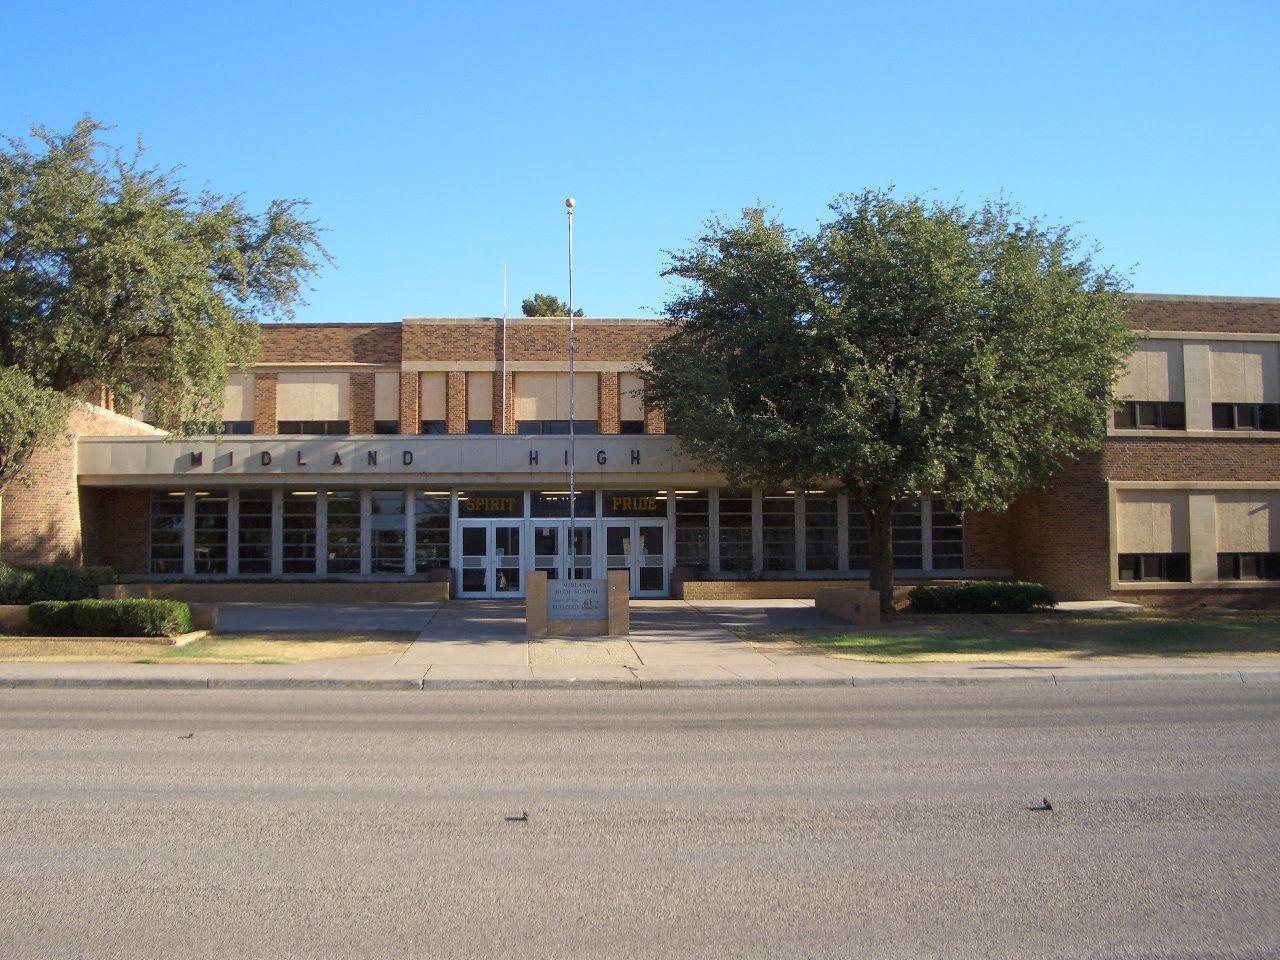 Midland High School image